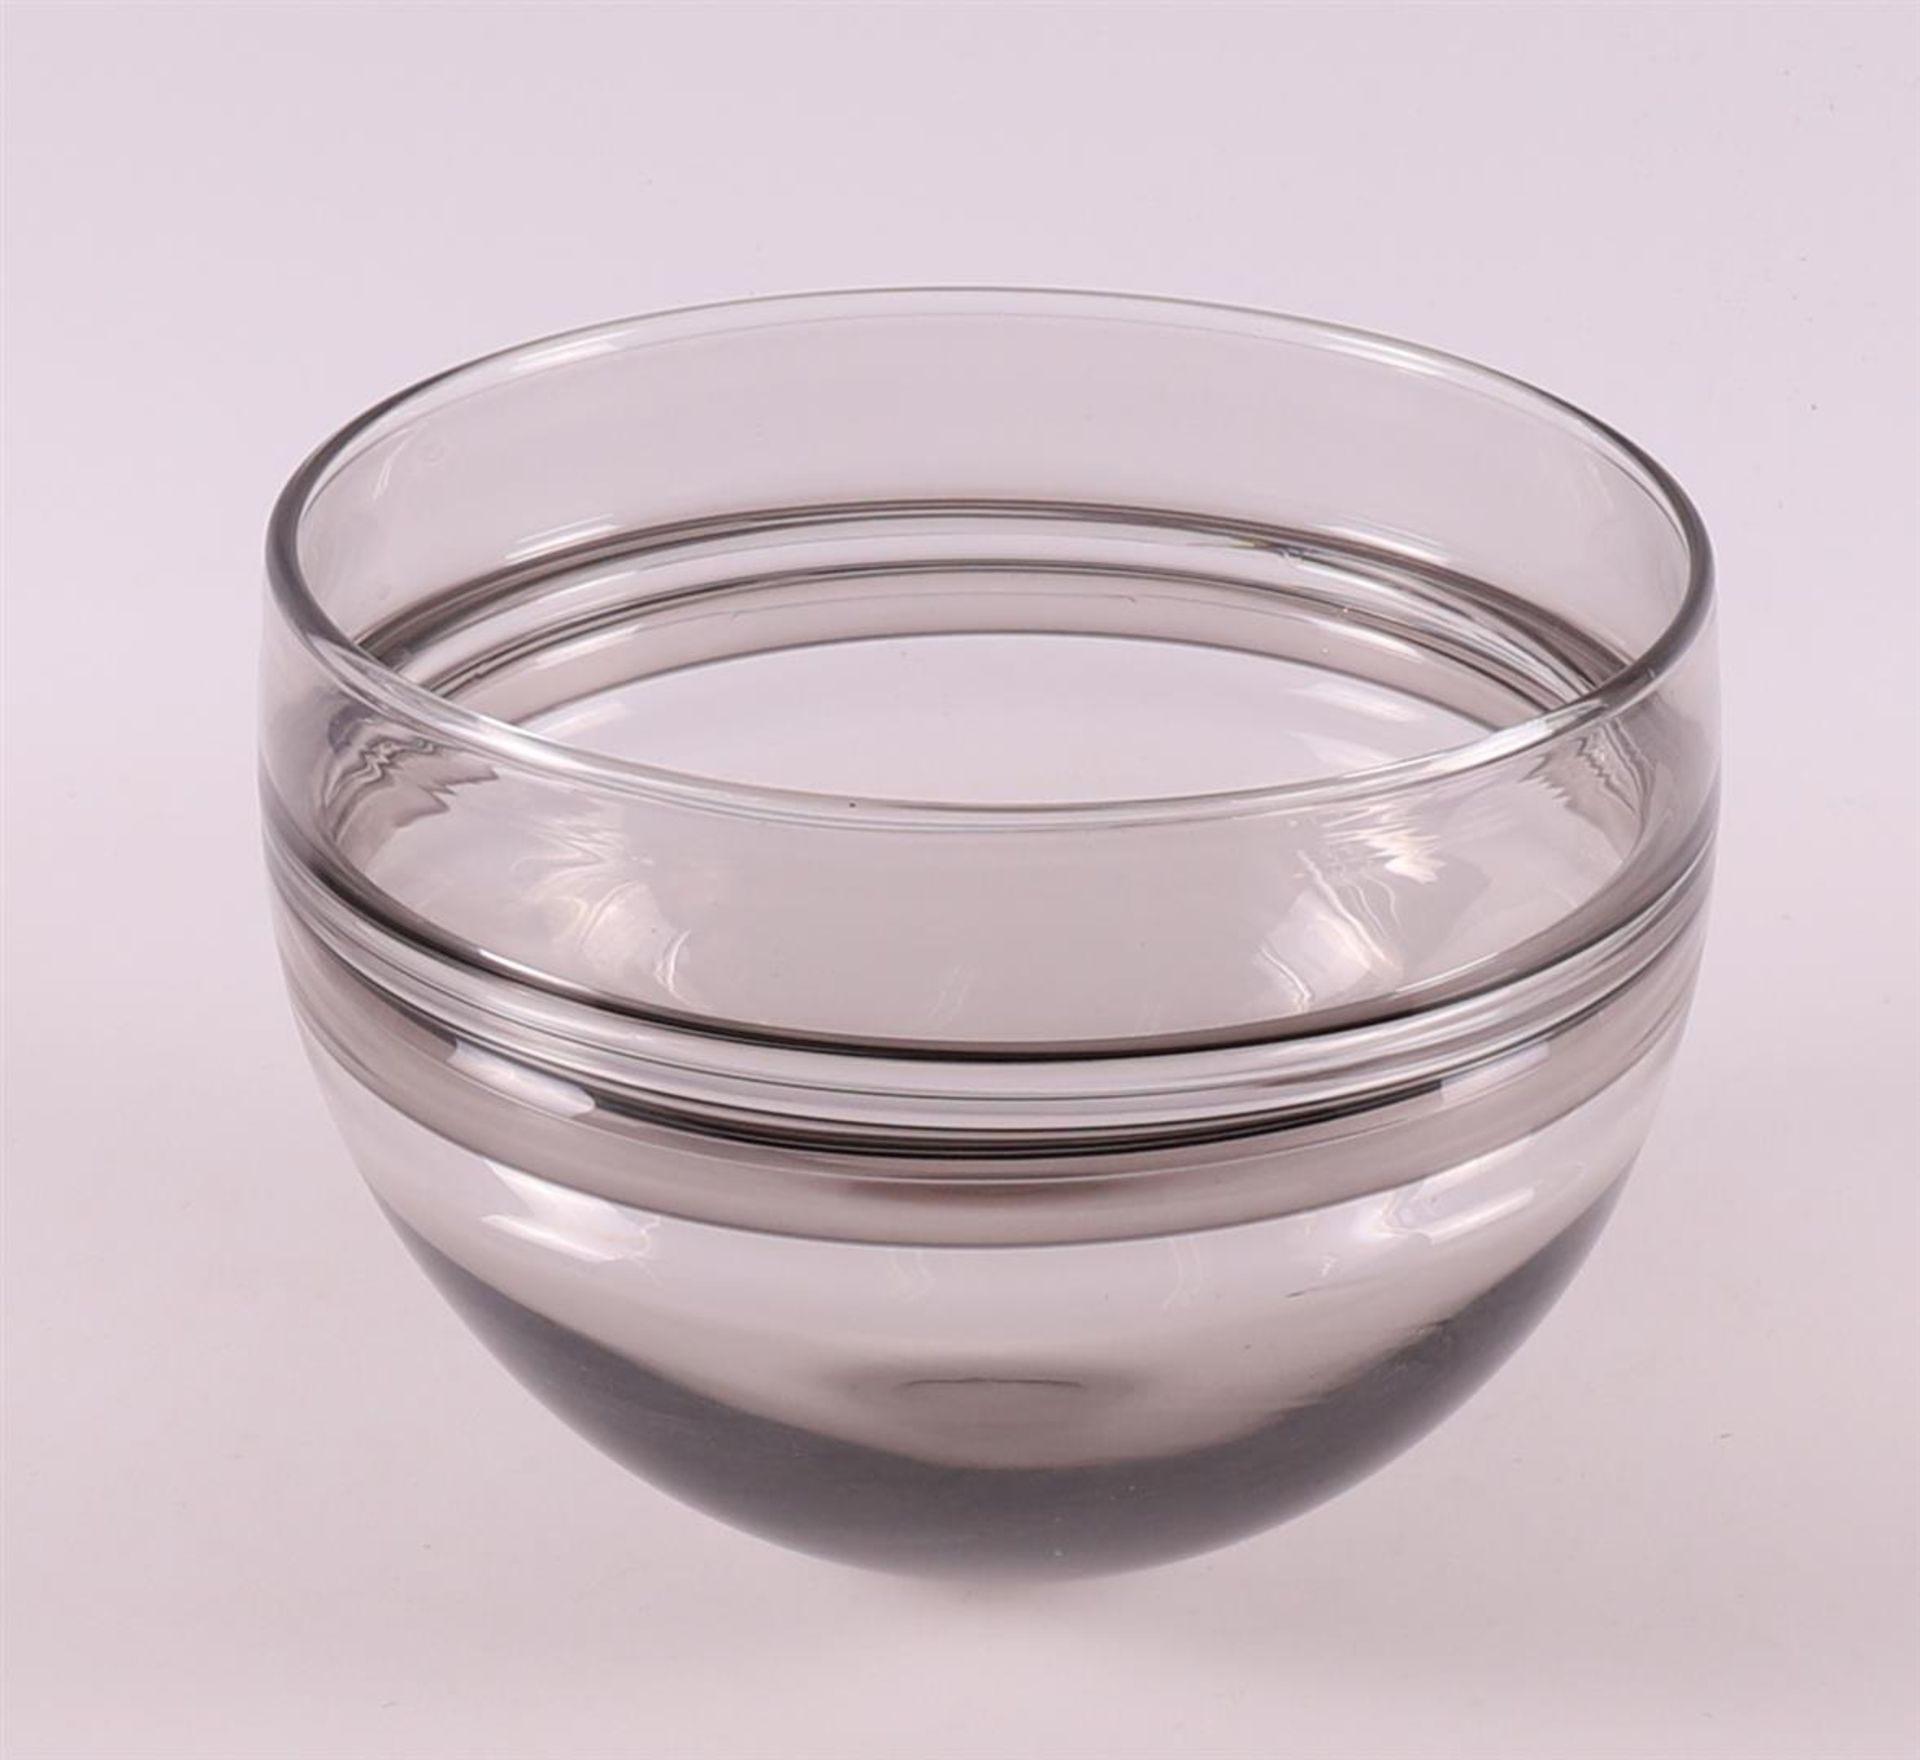 A clear glass bowl with horizontal stripes, design: Floris Meydam.